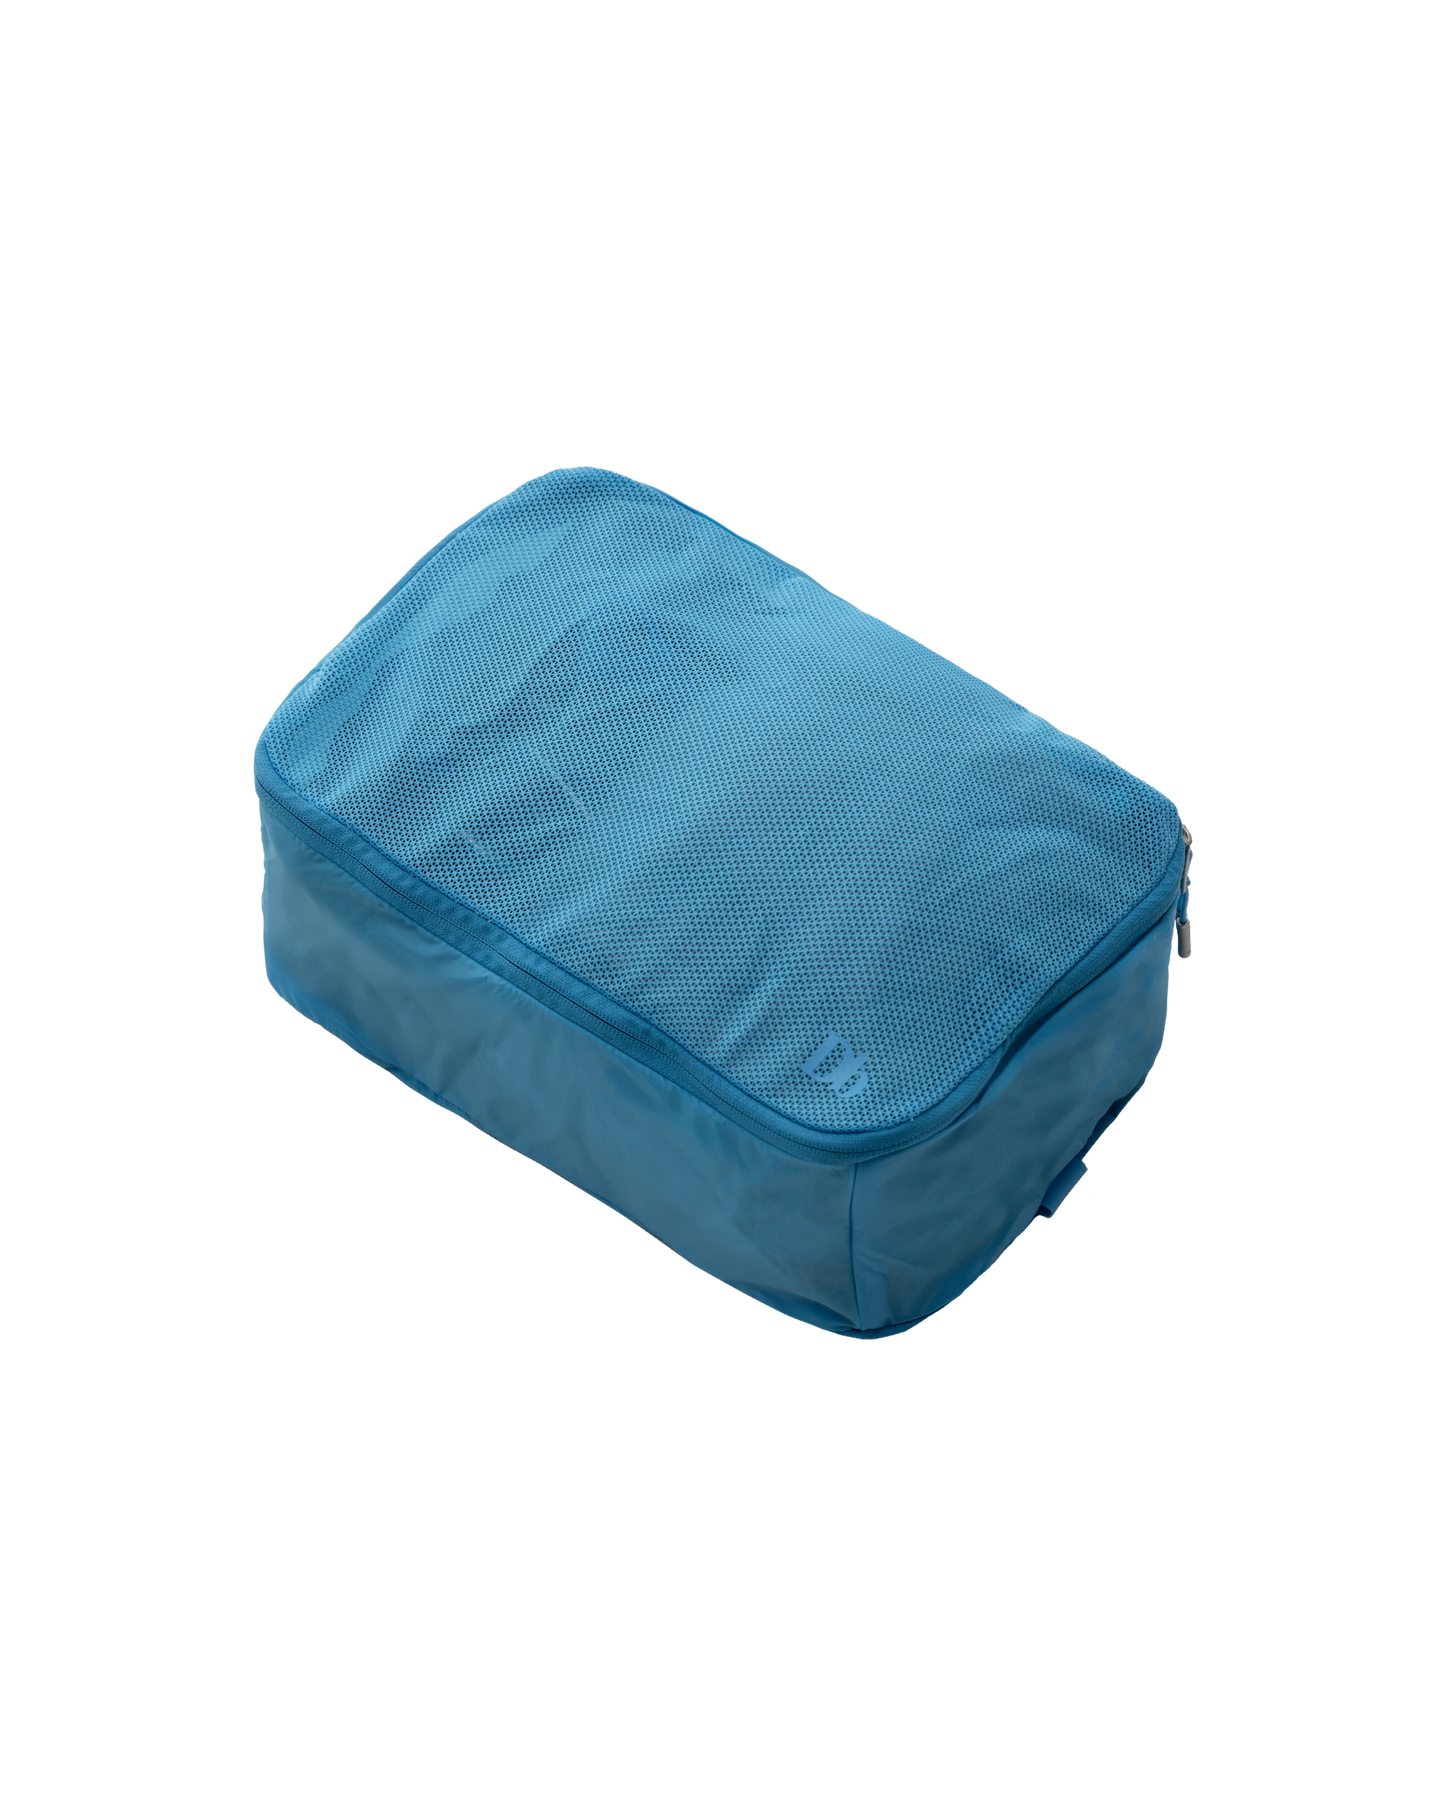 The Varrldsvan Large Deep Packing Cube